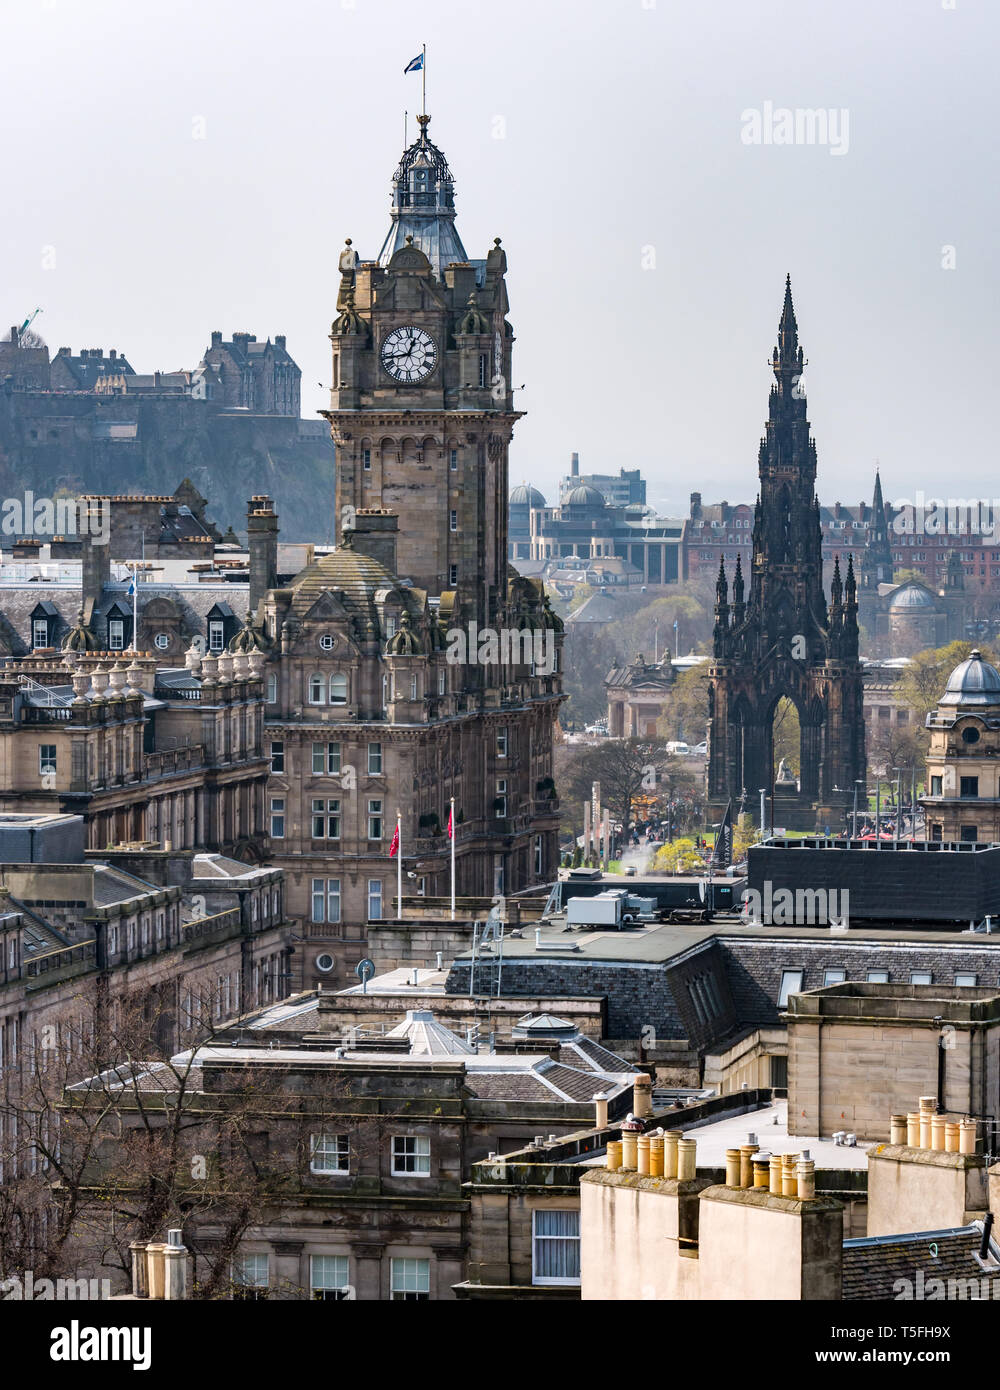 Balmoral Hotel clock tower and Scott monument with city skyline, Edinburgh city centre, Scotland, UK Stock Photo